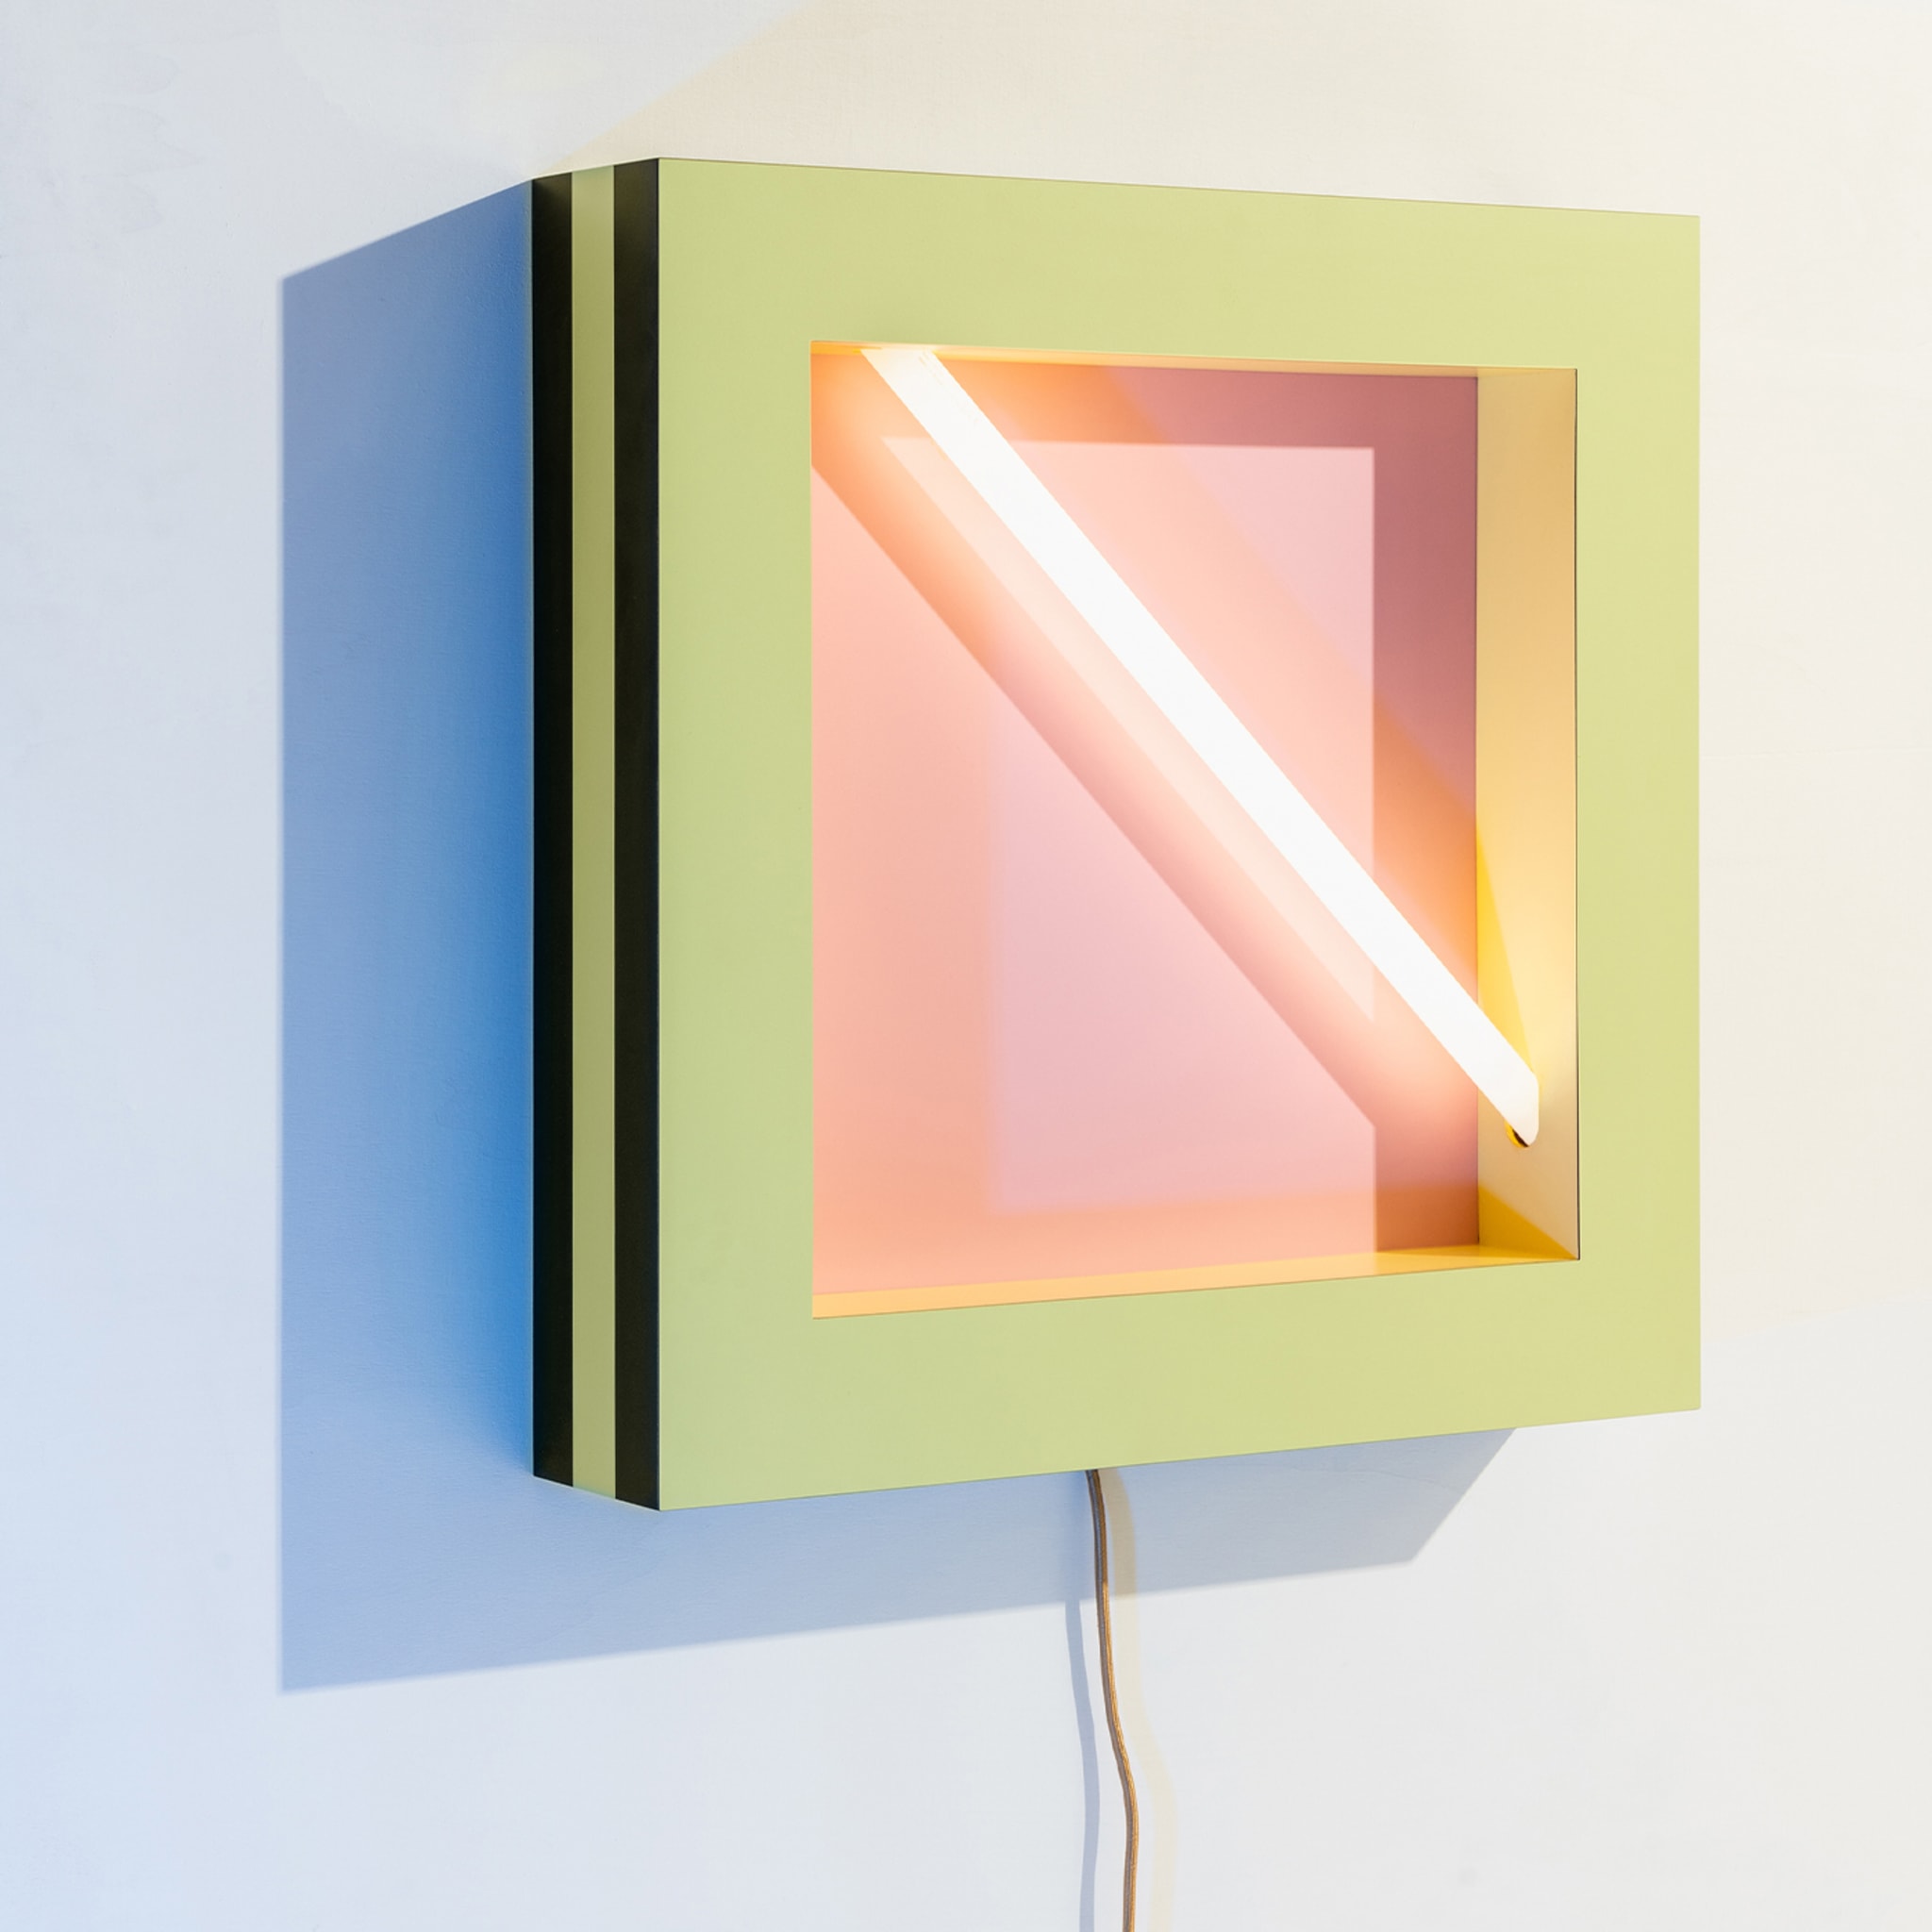 Negresco Wall Lamp by Martin Bedin - Alternative view 1